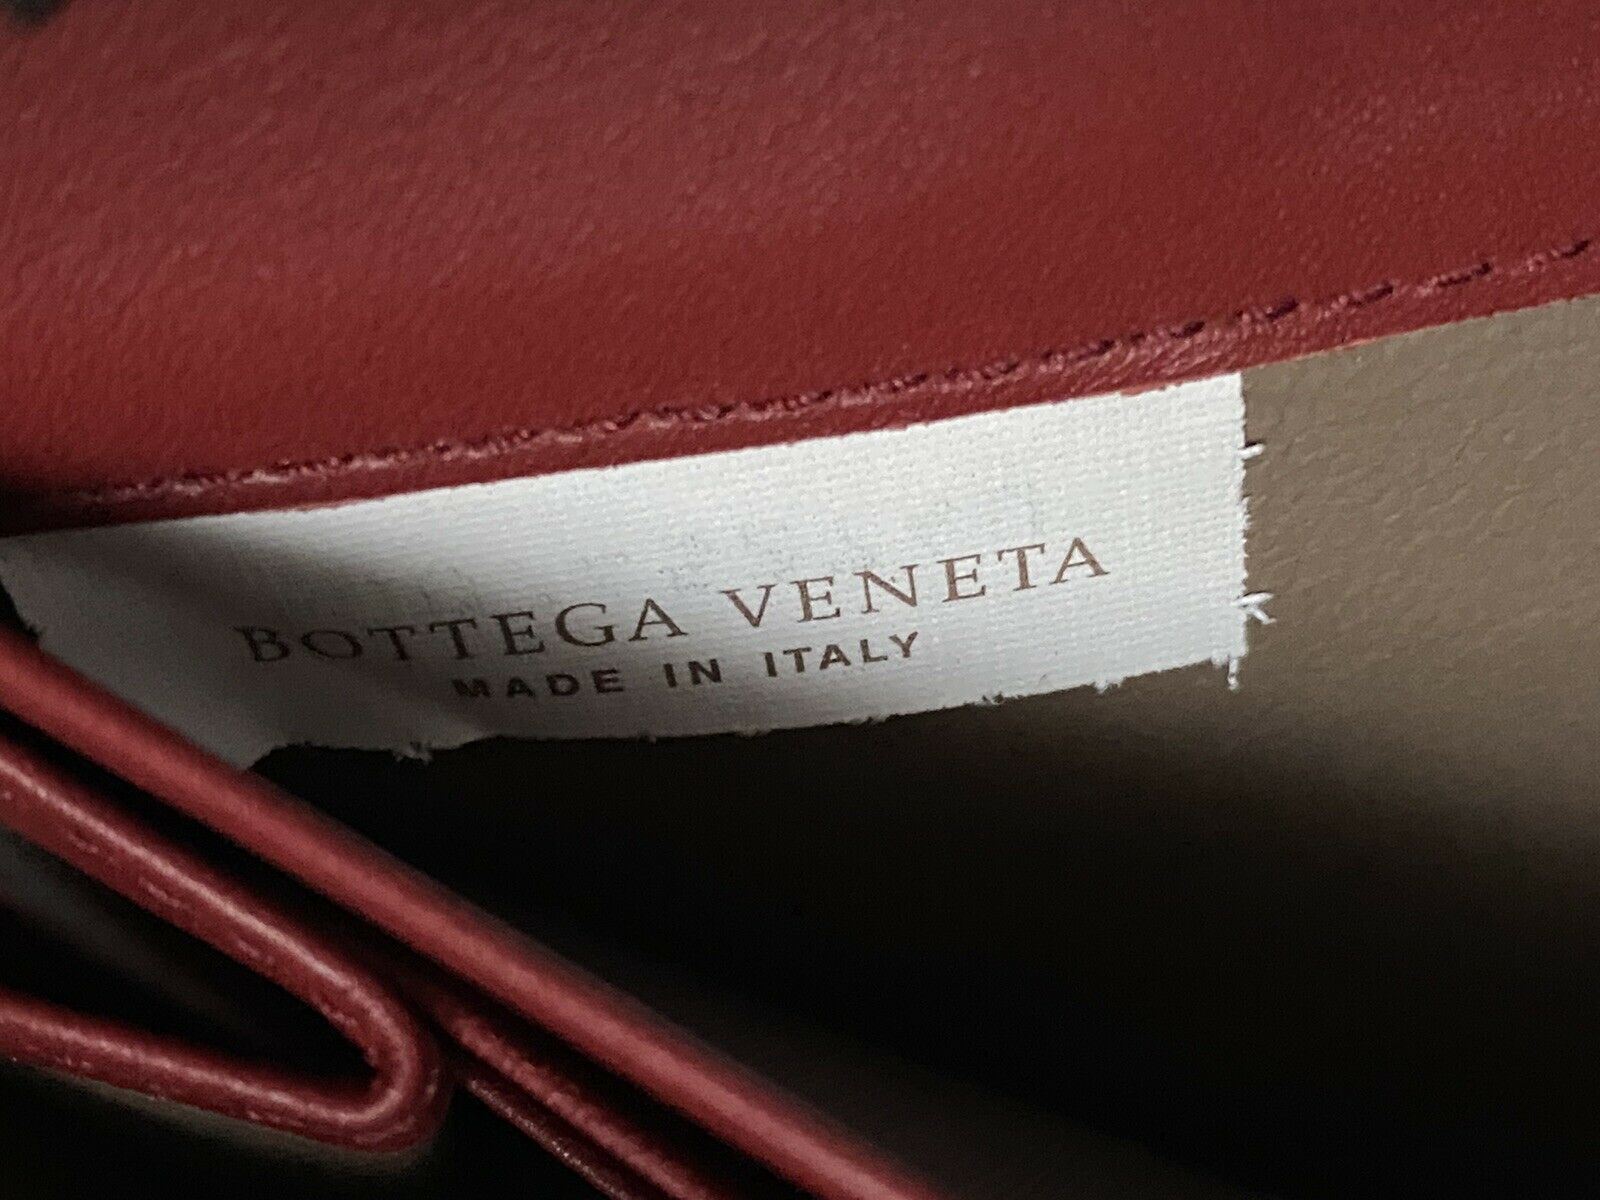 NWT Bottega Veneta Intrecciato Zipper Calf Leather Wallet Baccara Rose 518389